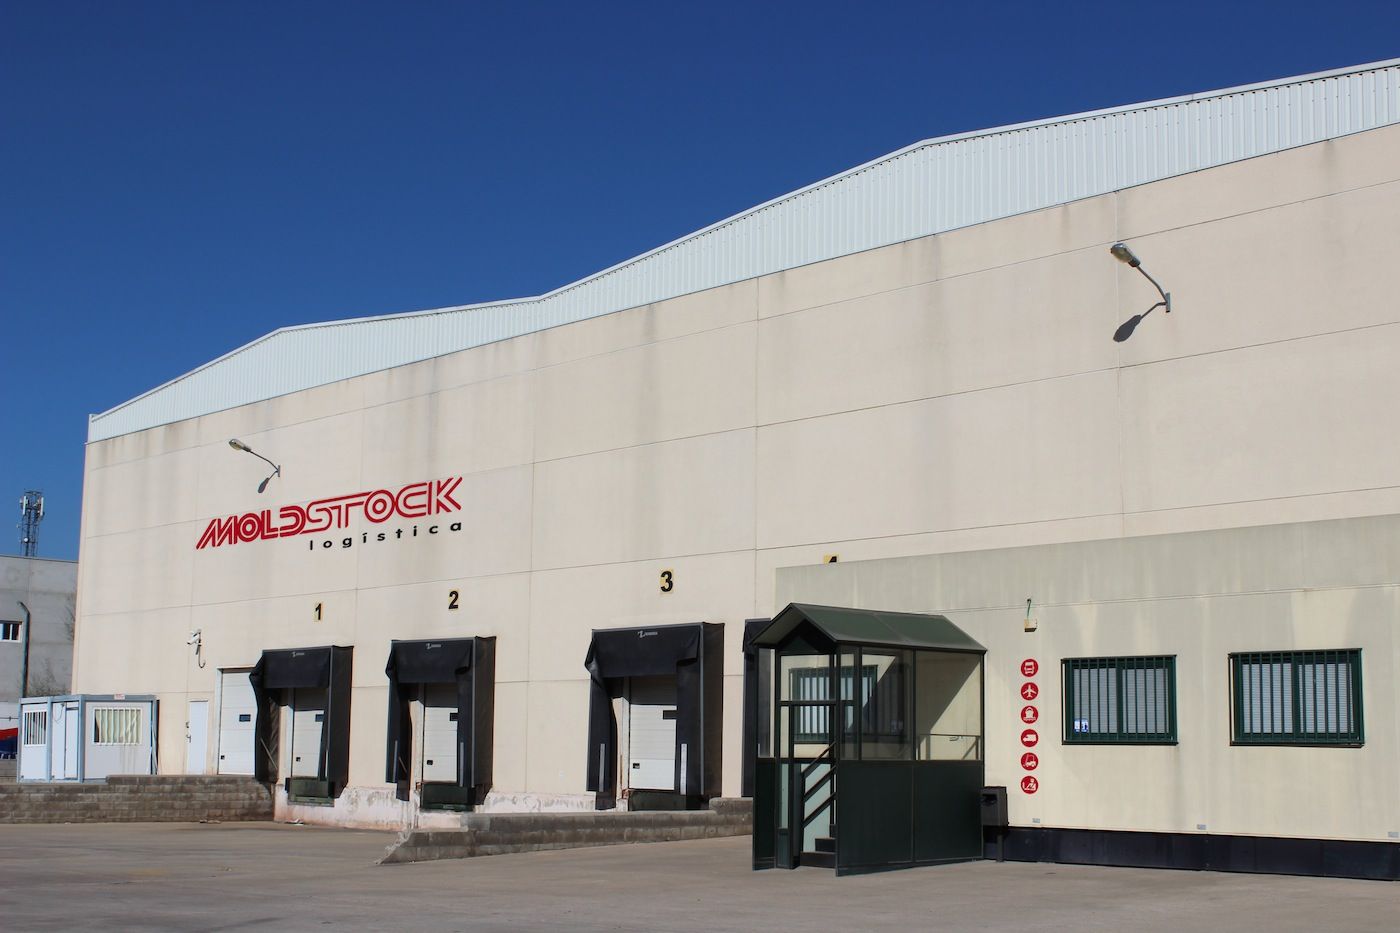 Centro Logistico Moldstock en Alcala de Henares